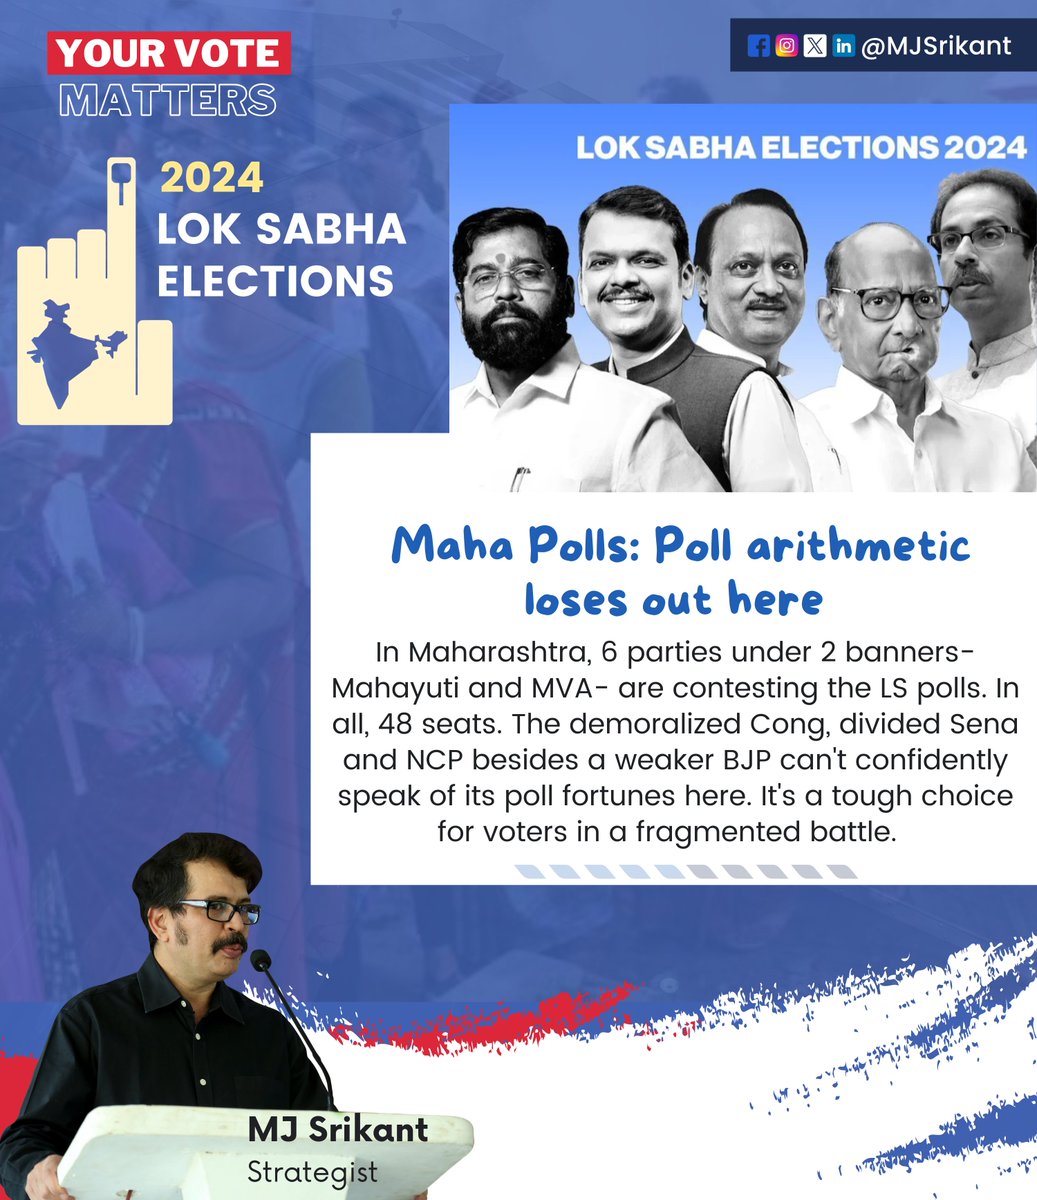 Maha Polls: Poll arithmetic loses out here 

#MahaPolls #MaharashtraElections #Mahayuti #MVA #LSPolls #48Seats #Congress #ShivSena #NCP #BJP #FragmentedBattle #ToughChoice